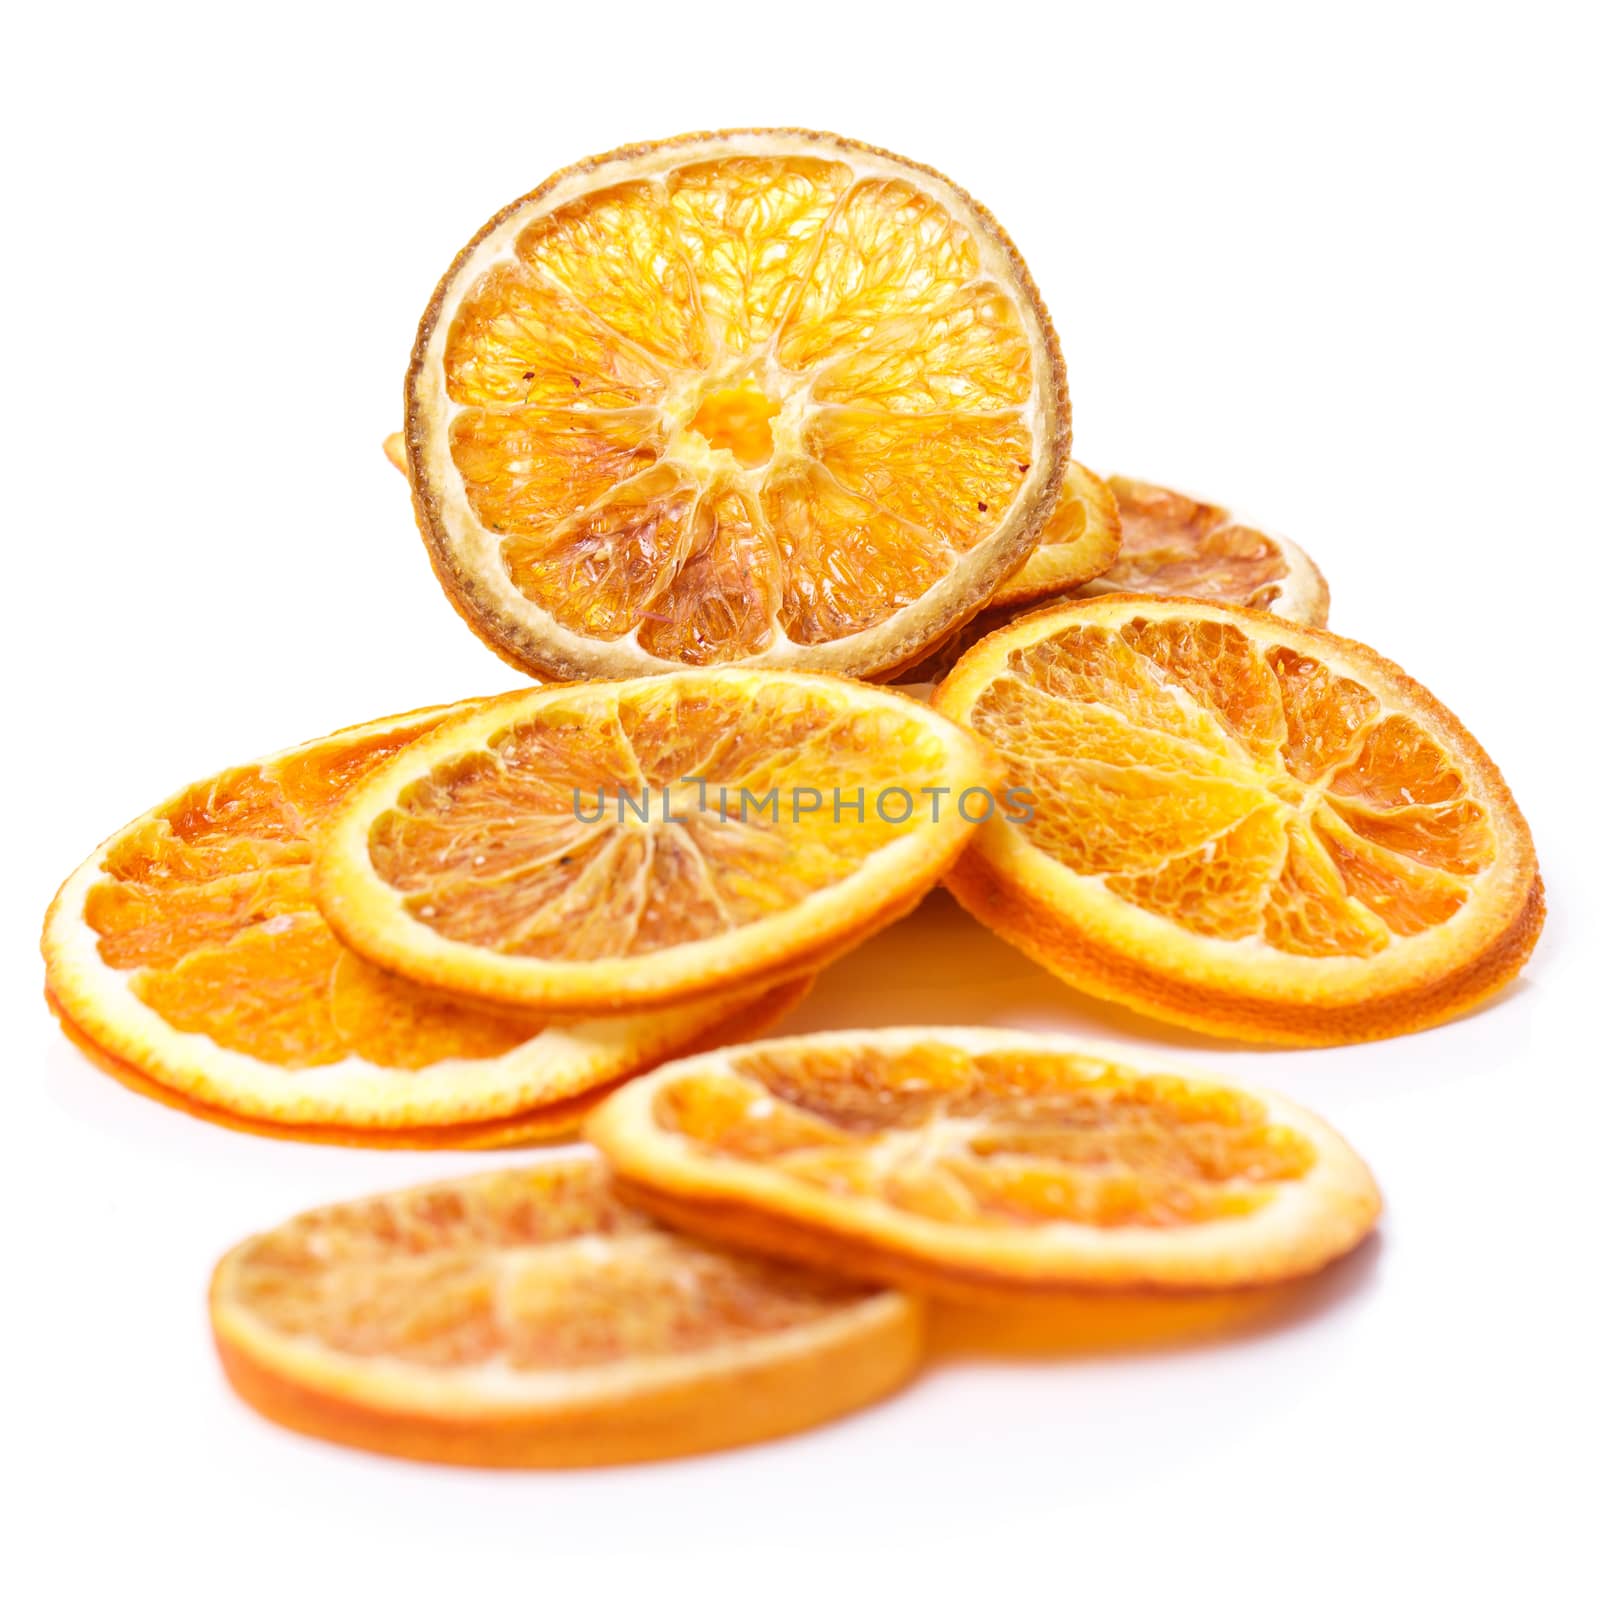 Dried orange on the table by rufatjumali